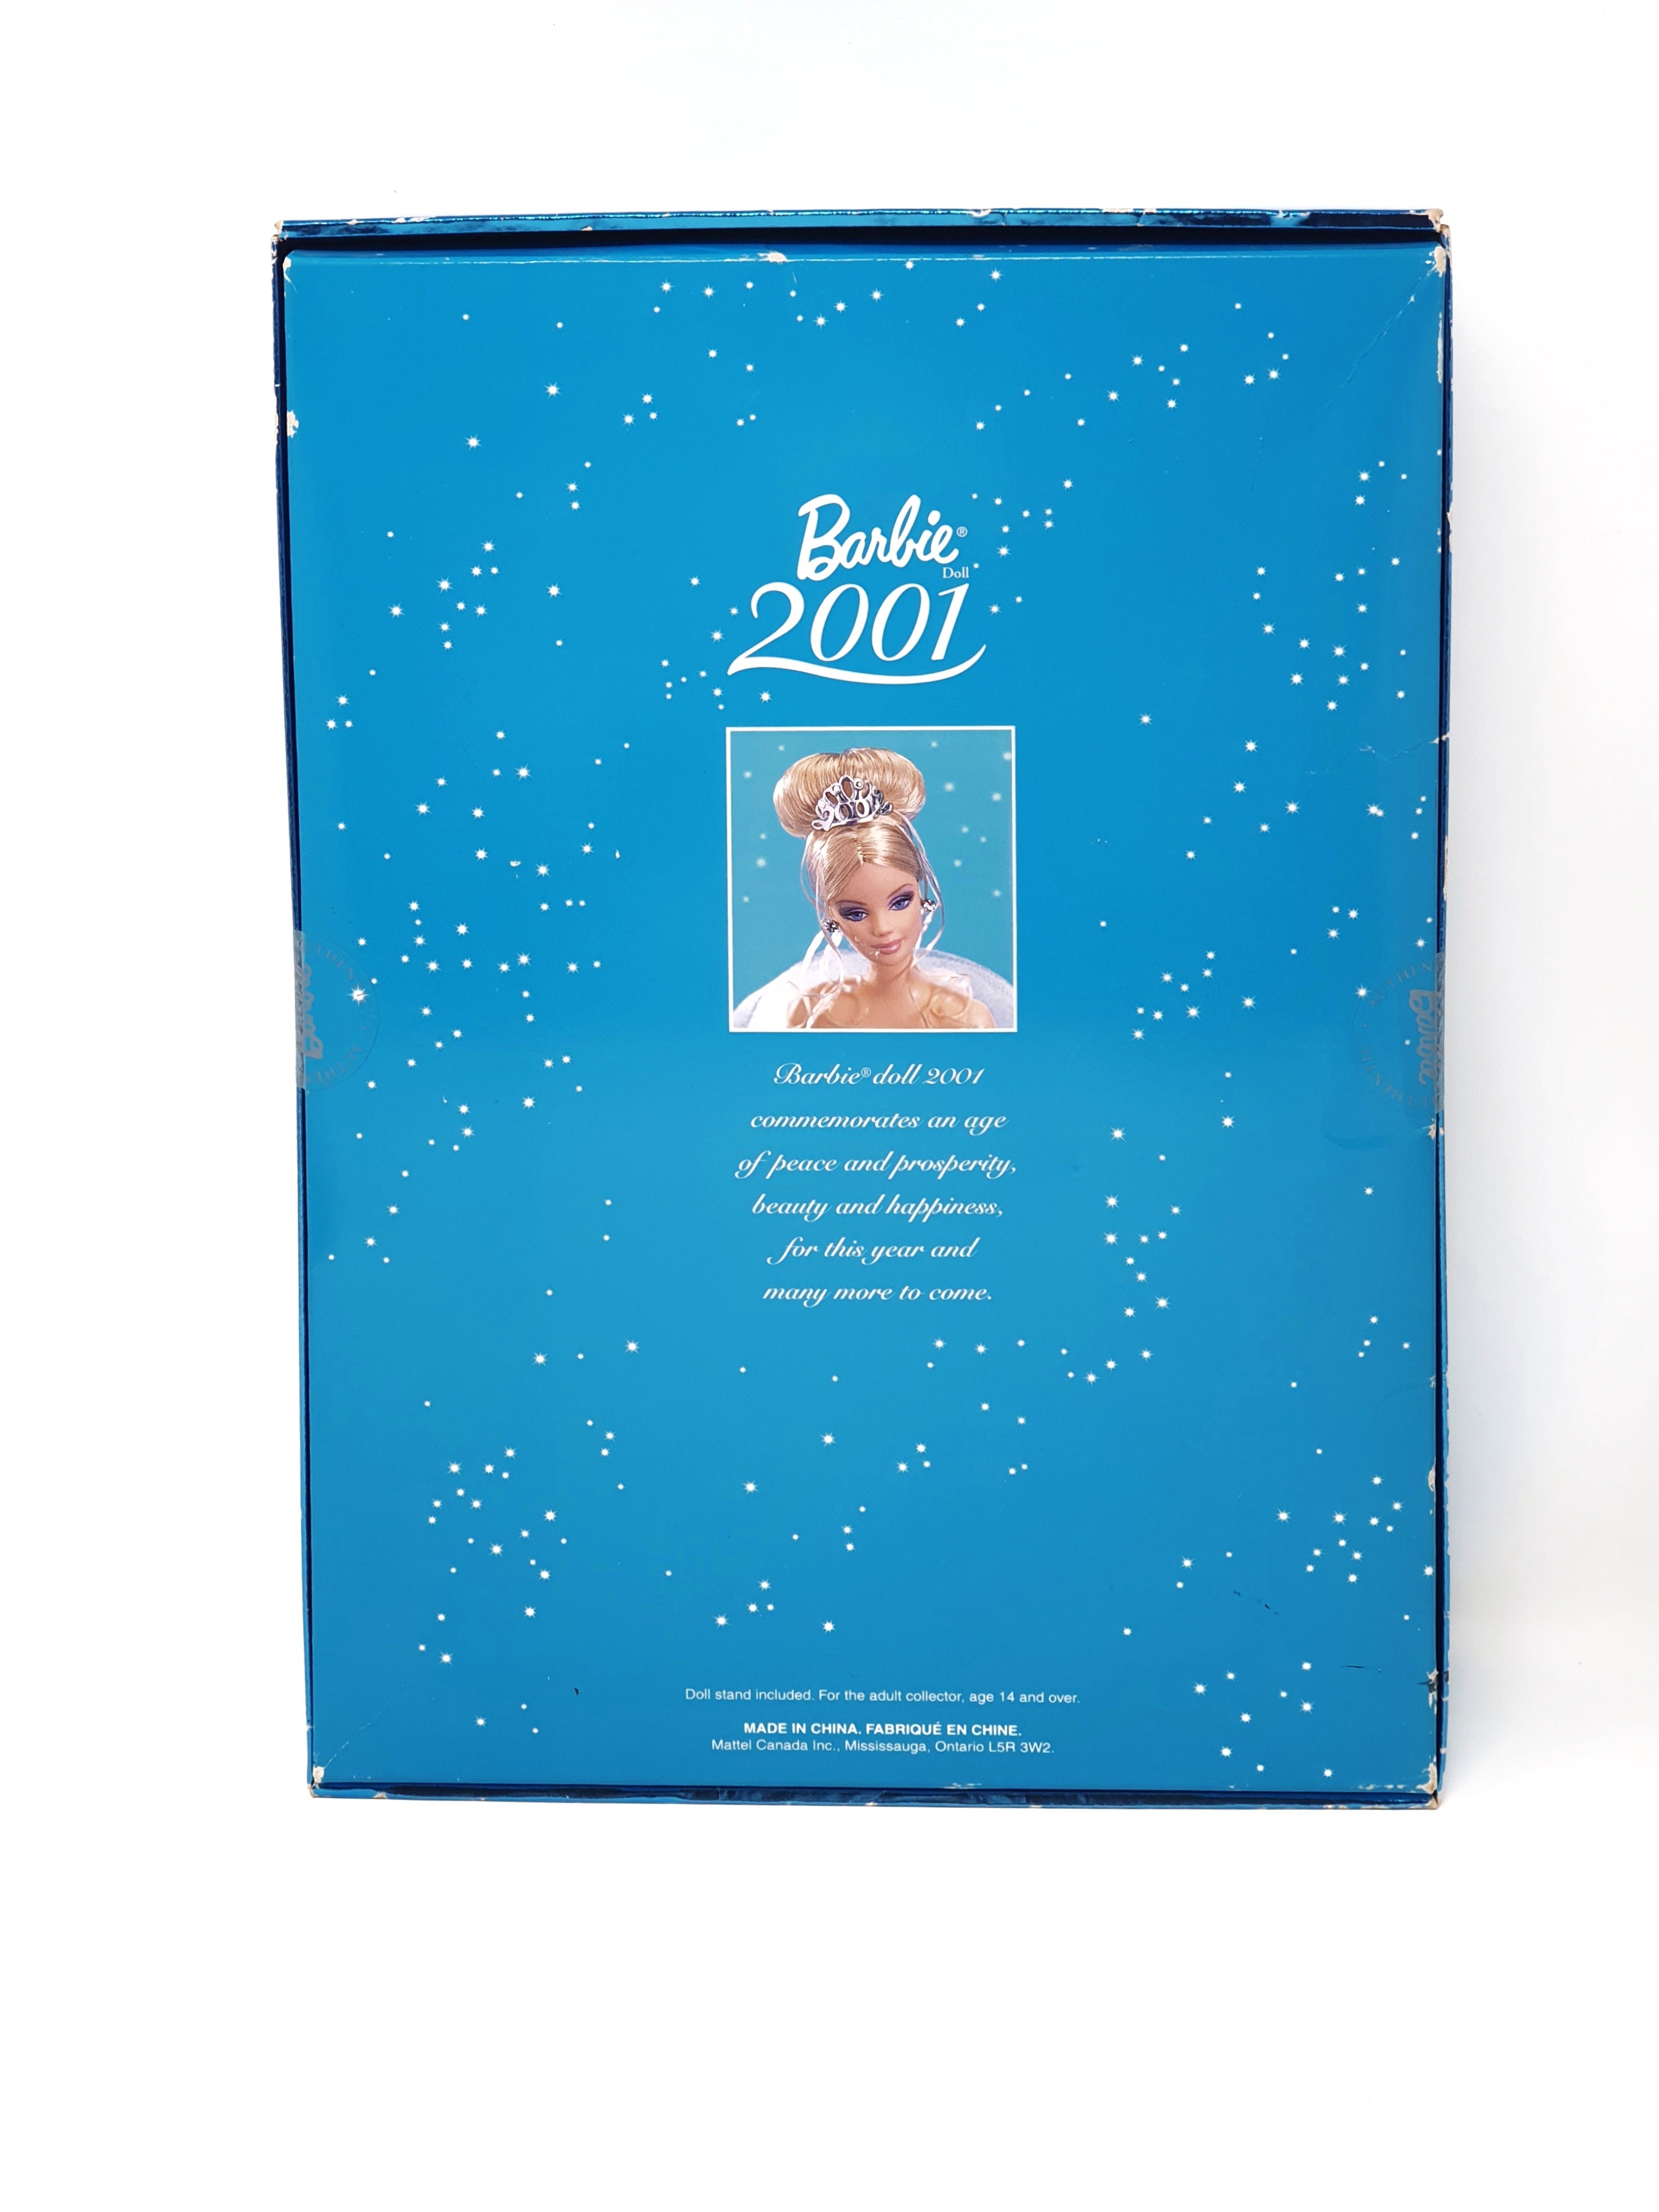 Barbie Collector Edition, Mattel 2001